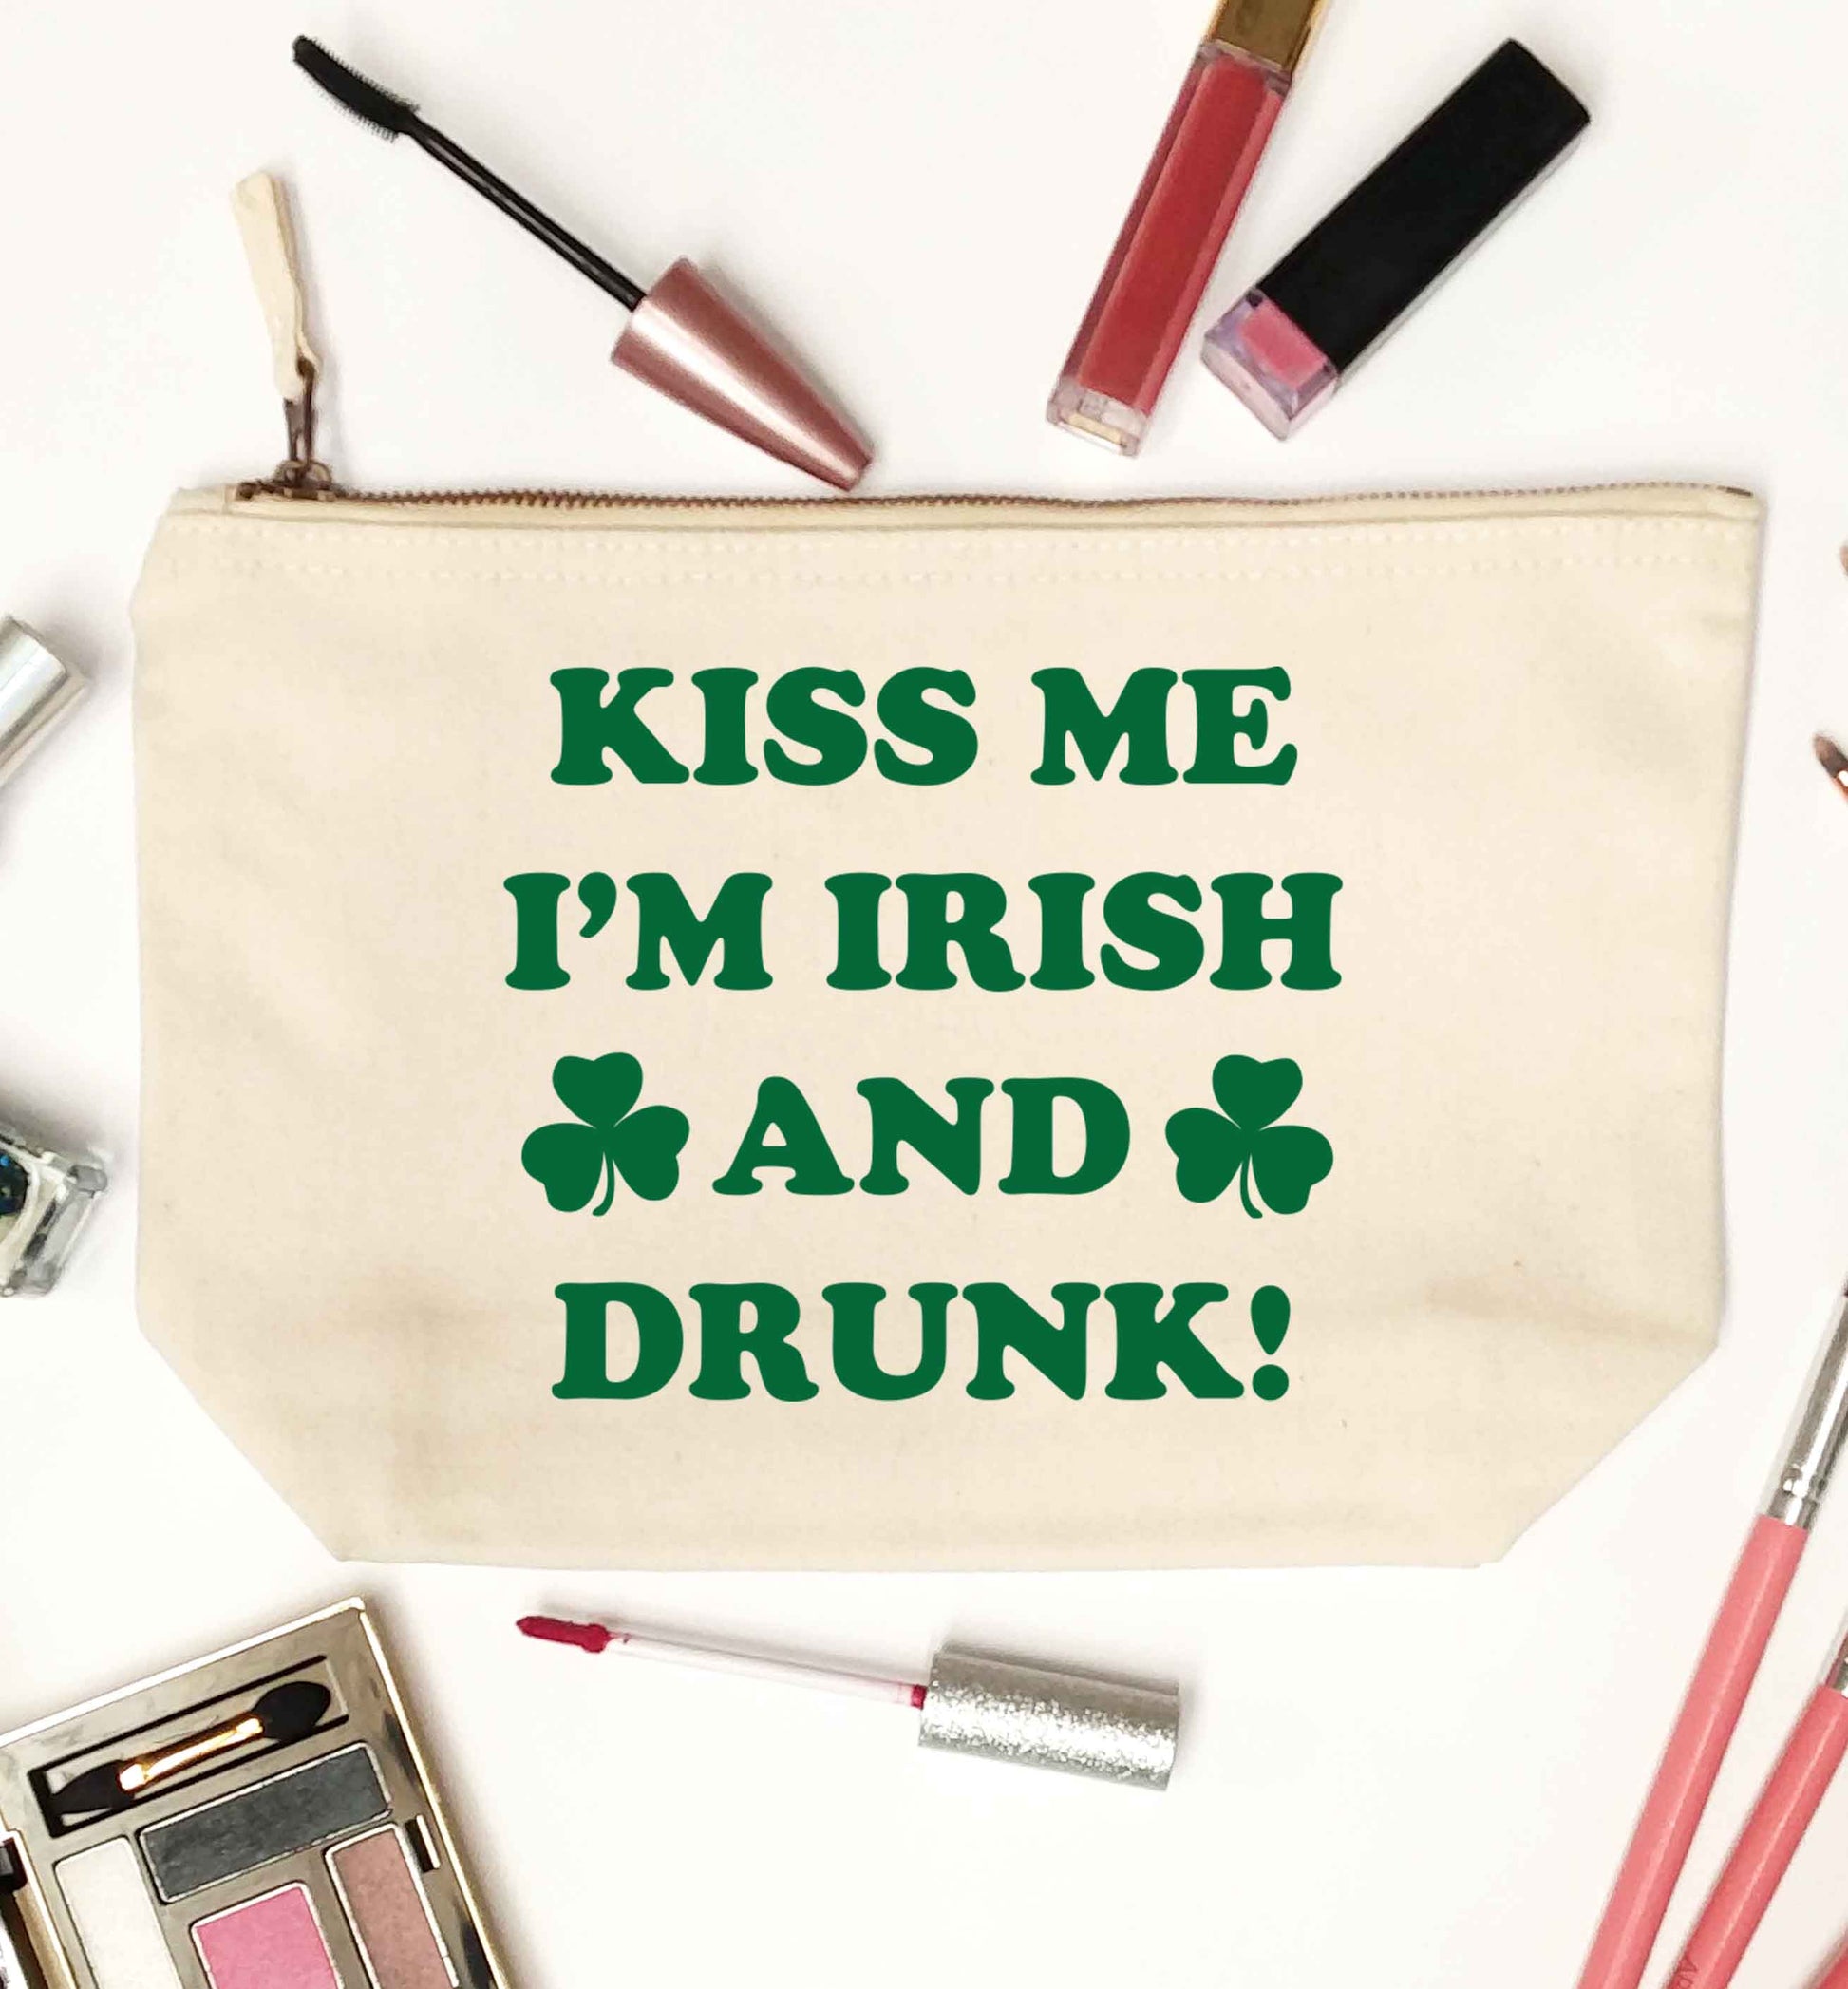 Kiss me I'm Irish and drunk natural makeup bag